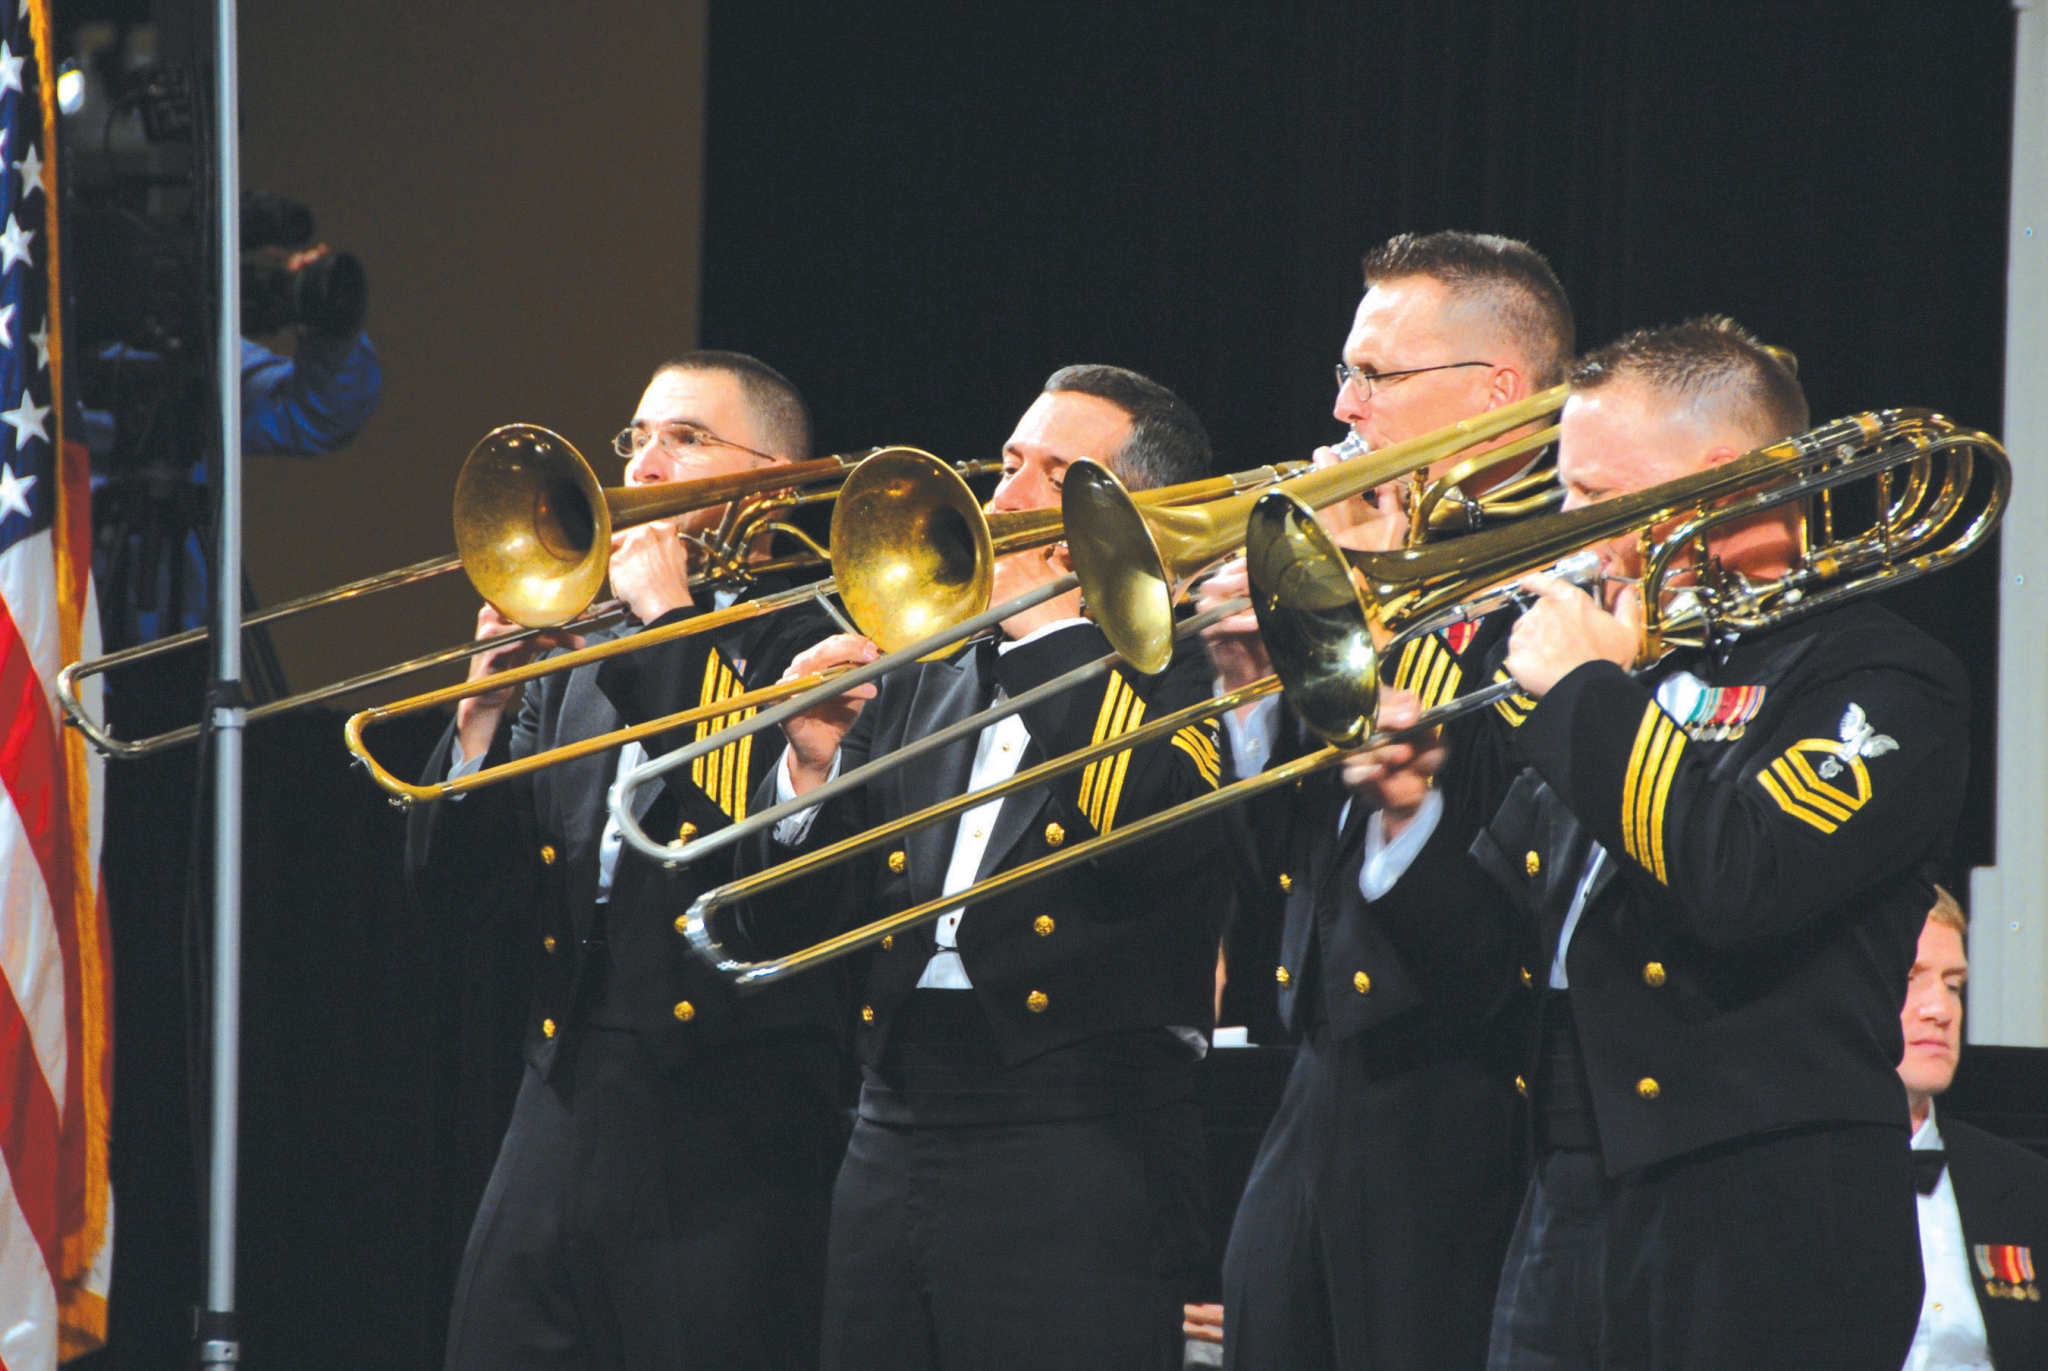 U.S. Navy Band to perform - The Edwardsville Intelligencer